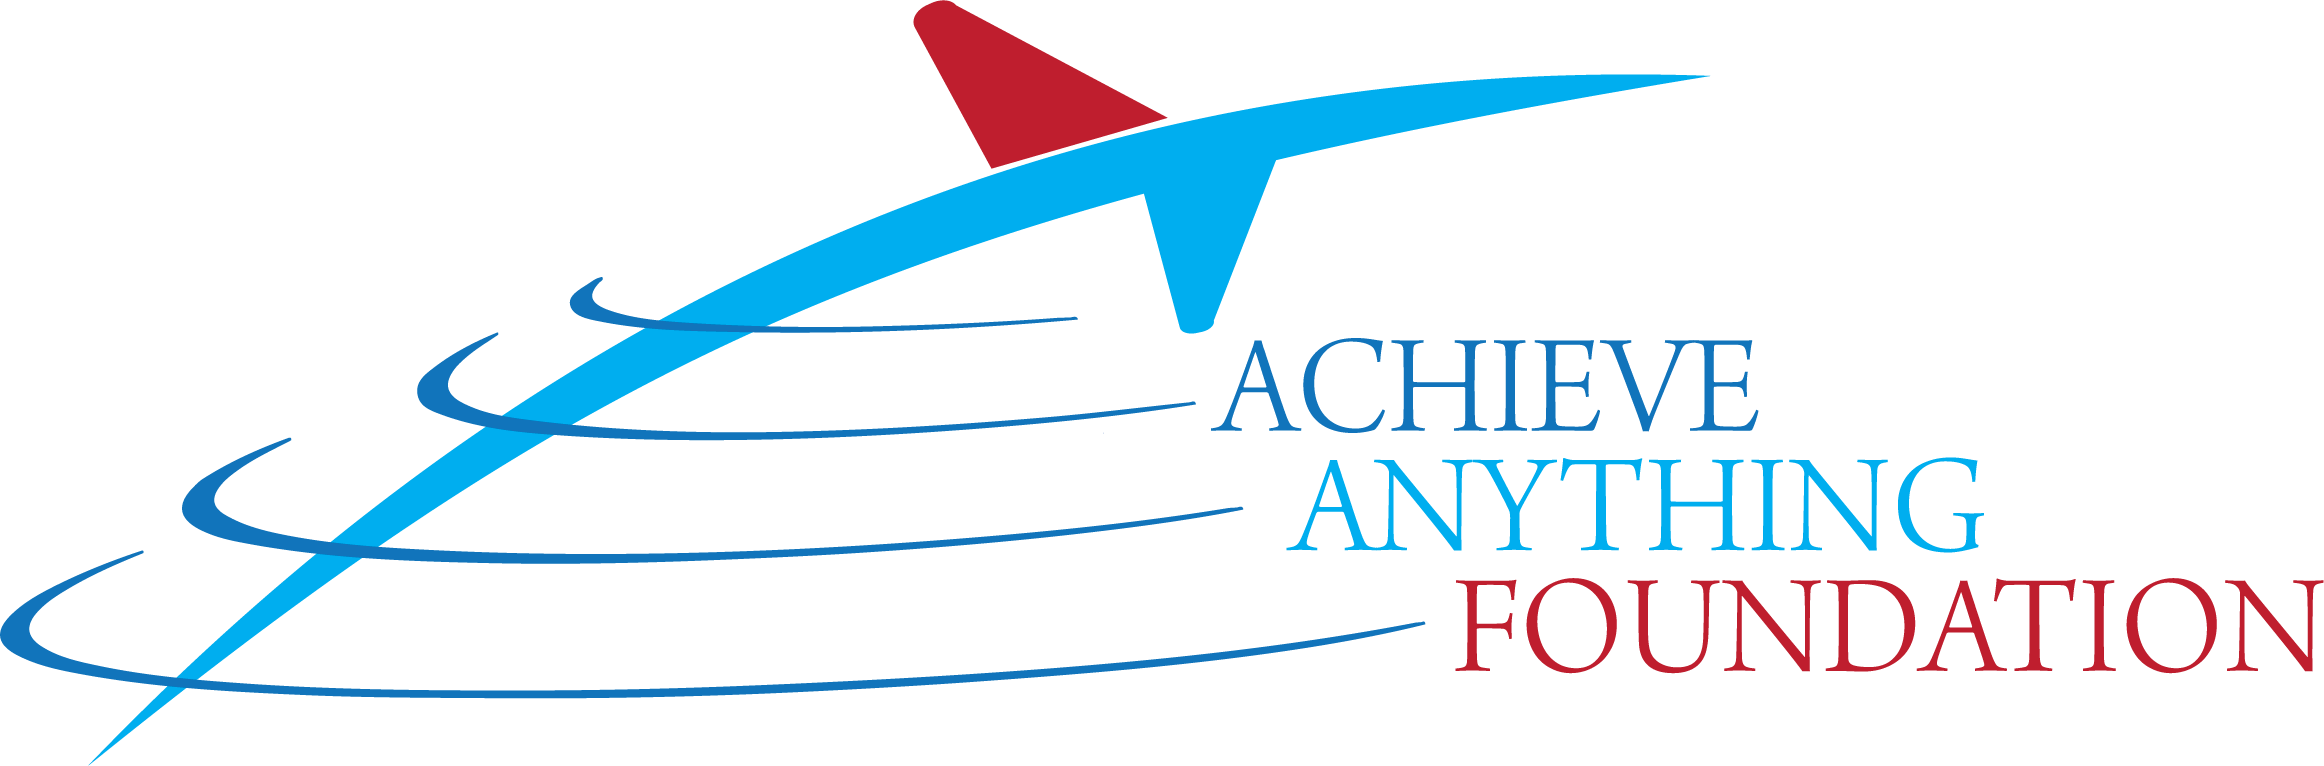 Achieve Anything Foundation logo